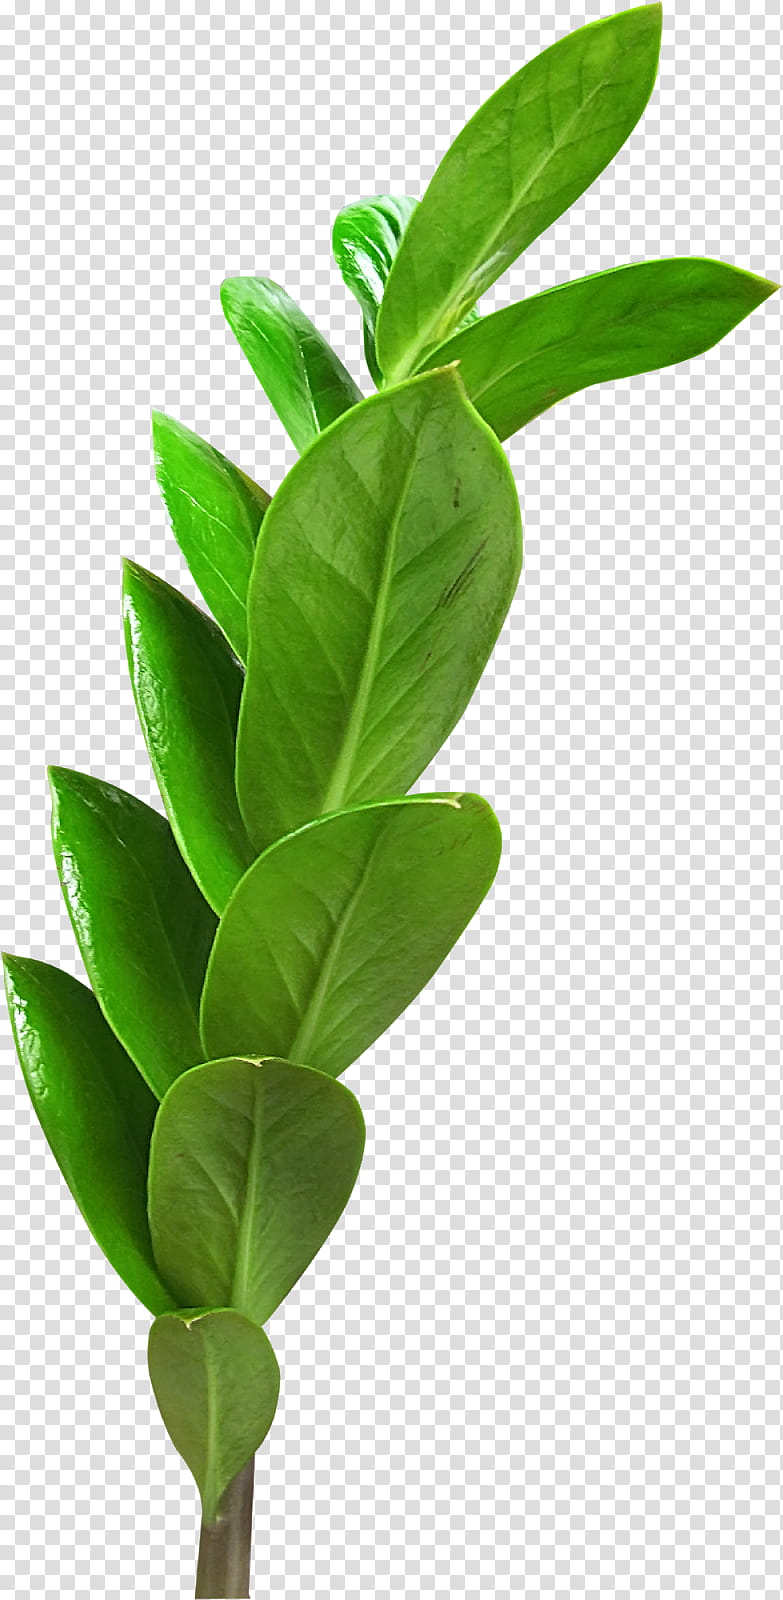 Green Leaf, Branch, Blog, Liana, Ifolder, Flower, Plant, Houseplant transparent background PNG clipart